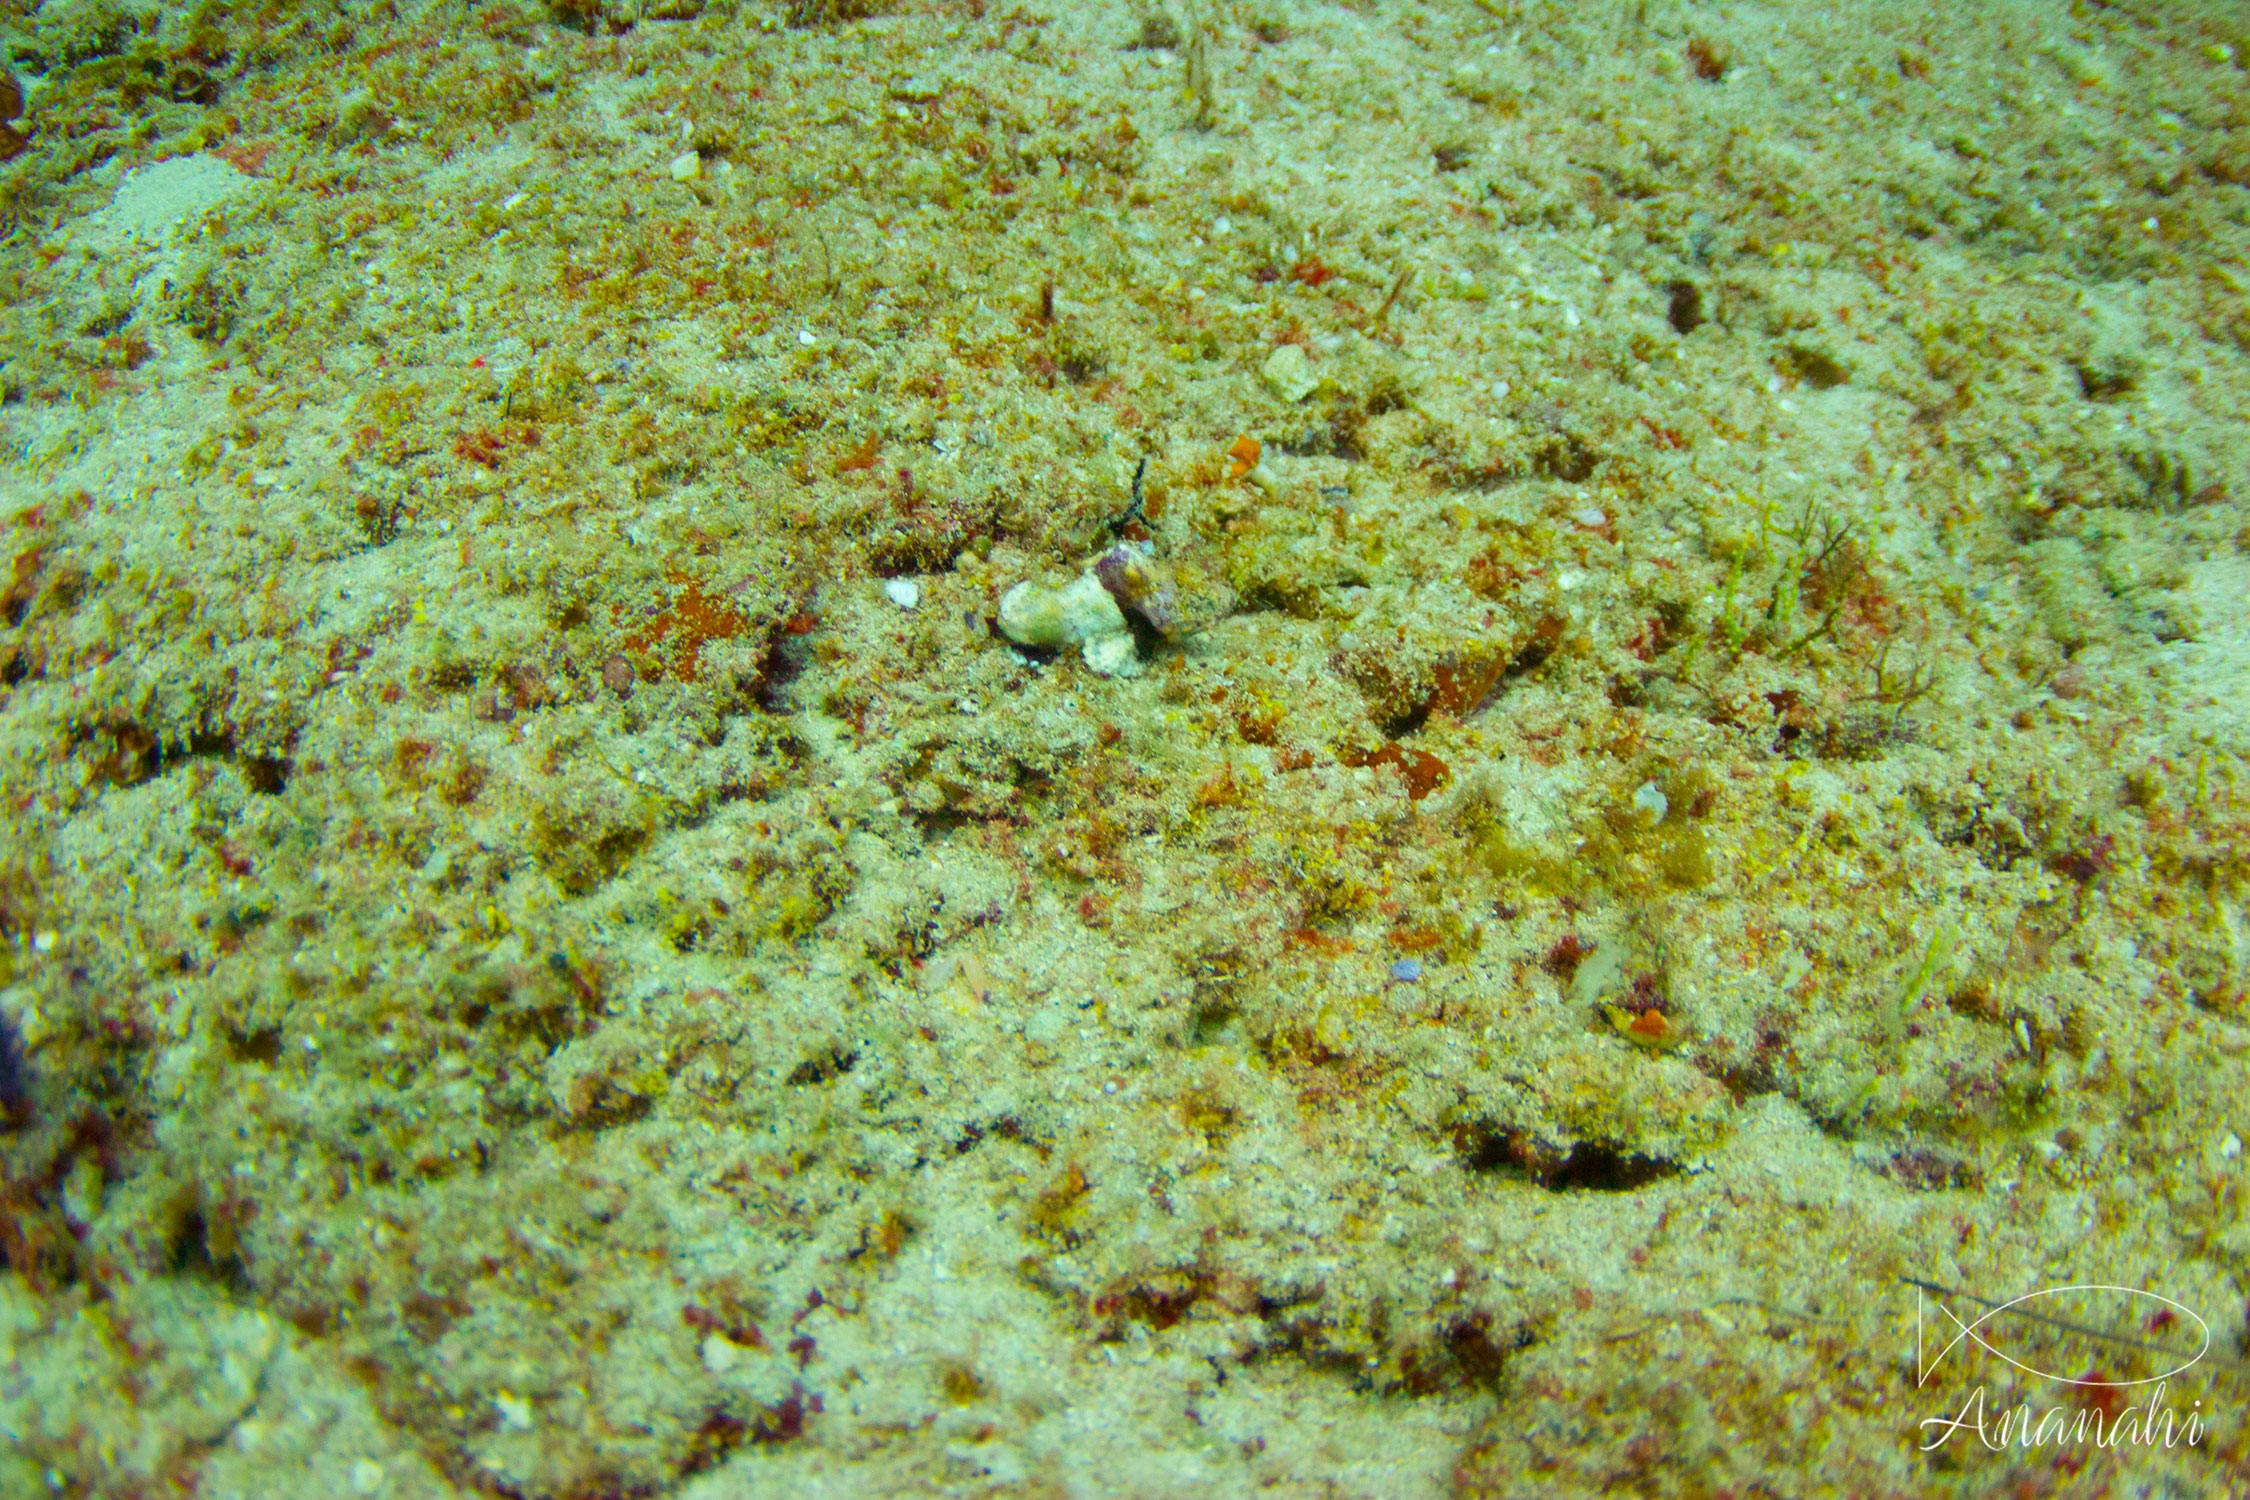 Juvenile reef stonefish of Maldives